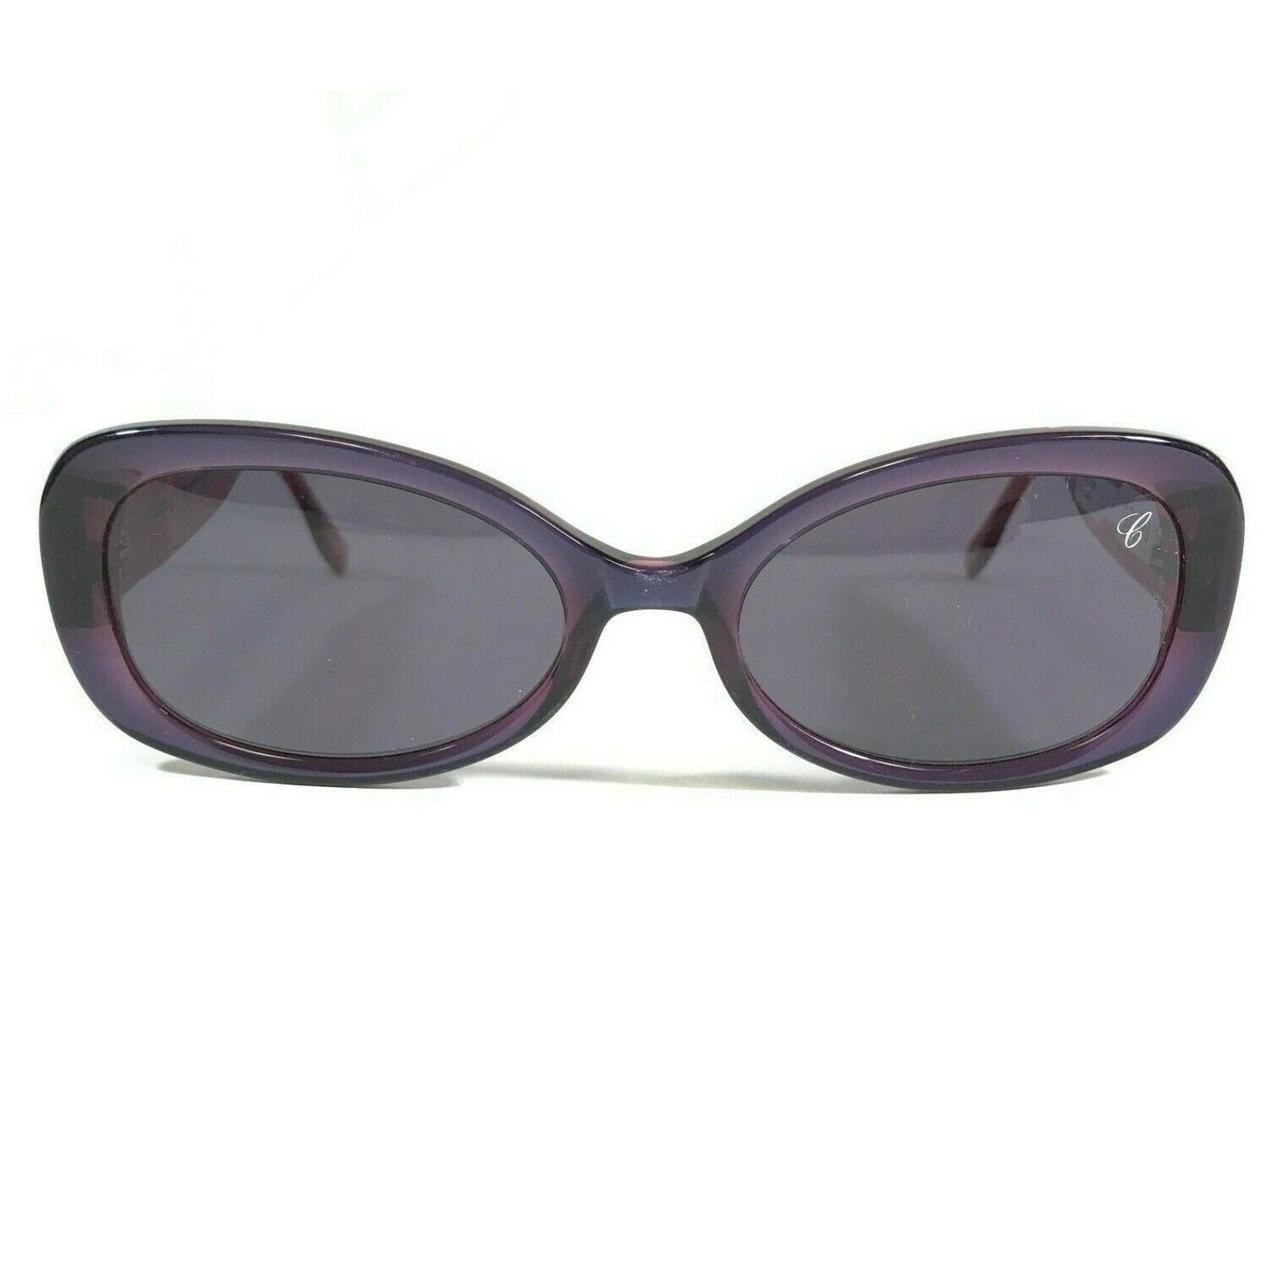 Product Image 2 - Chopard Sunglasses C555 00 6061